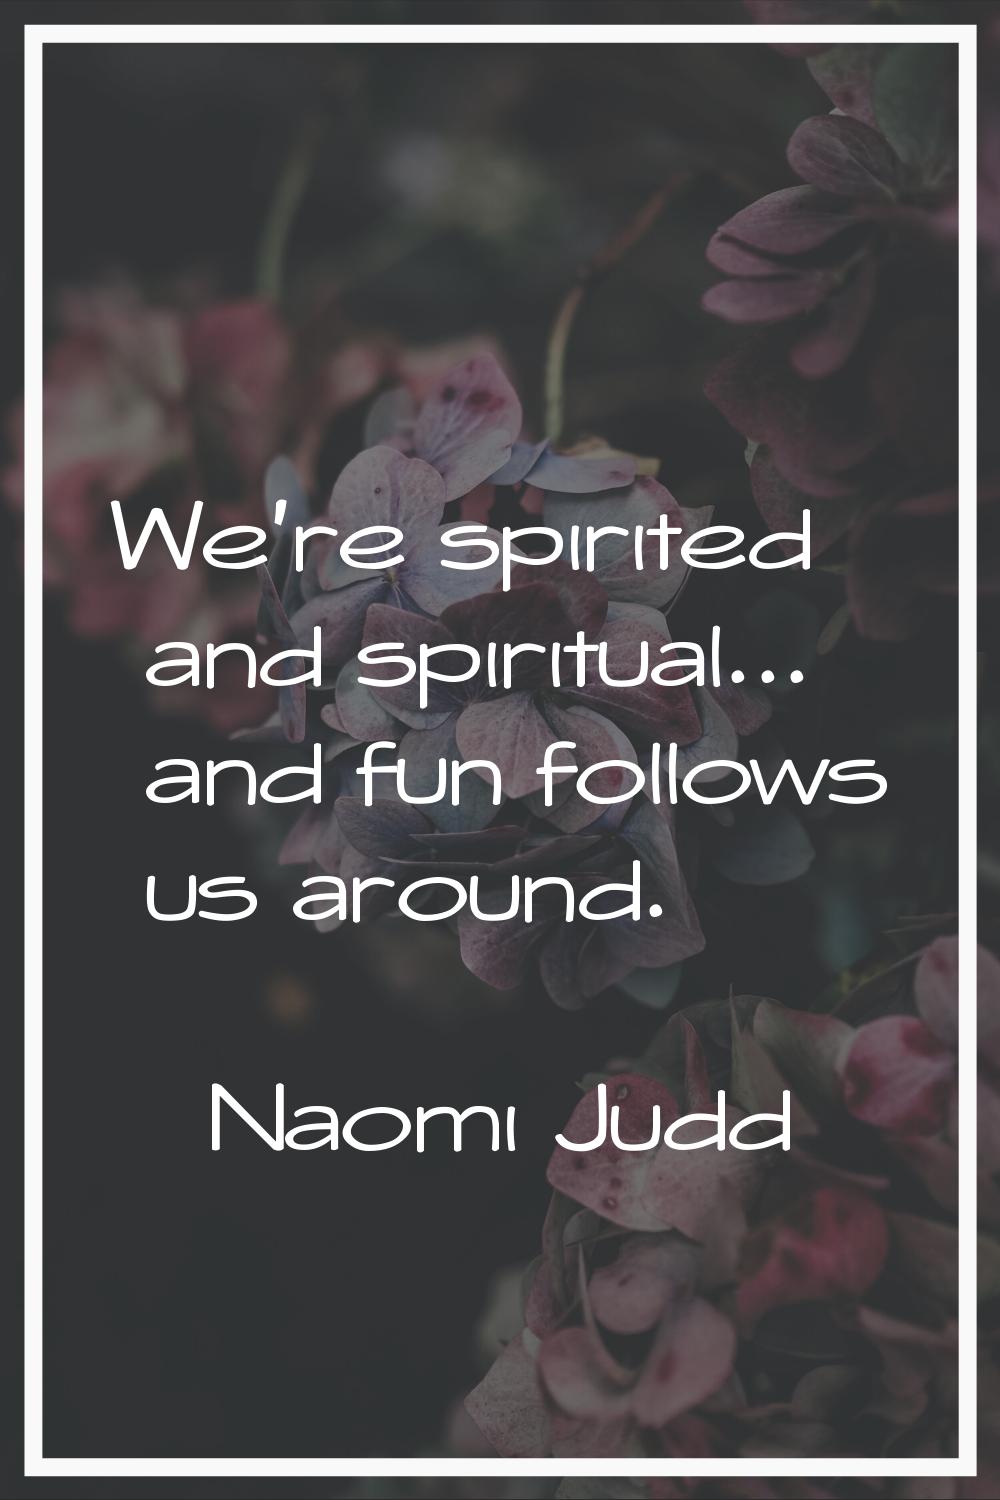 We're spirited and spiritual... and fun follows us around.